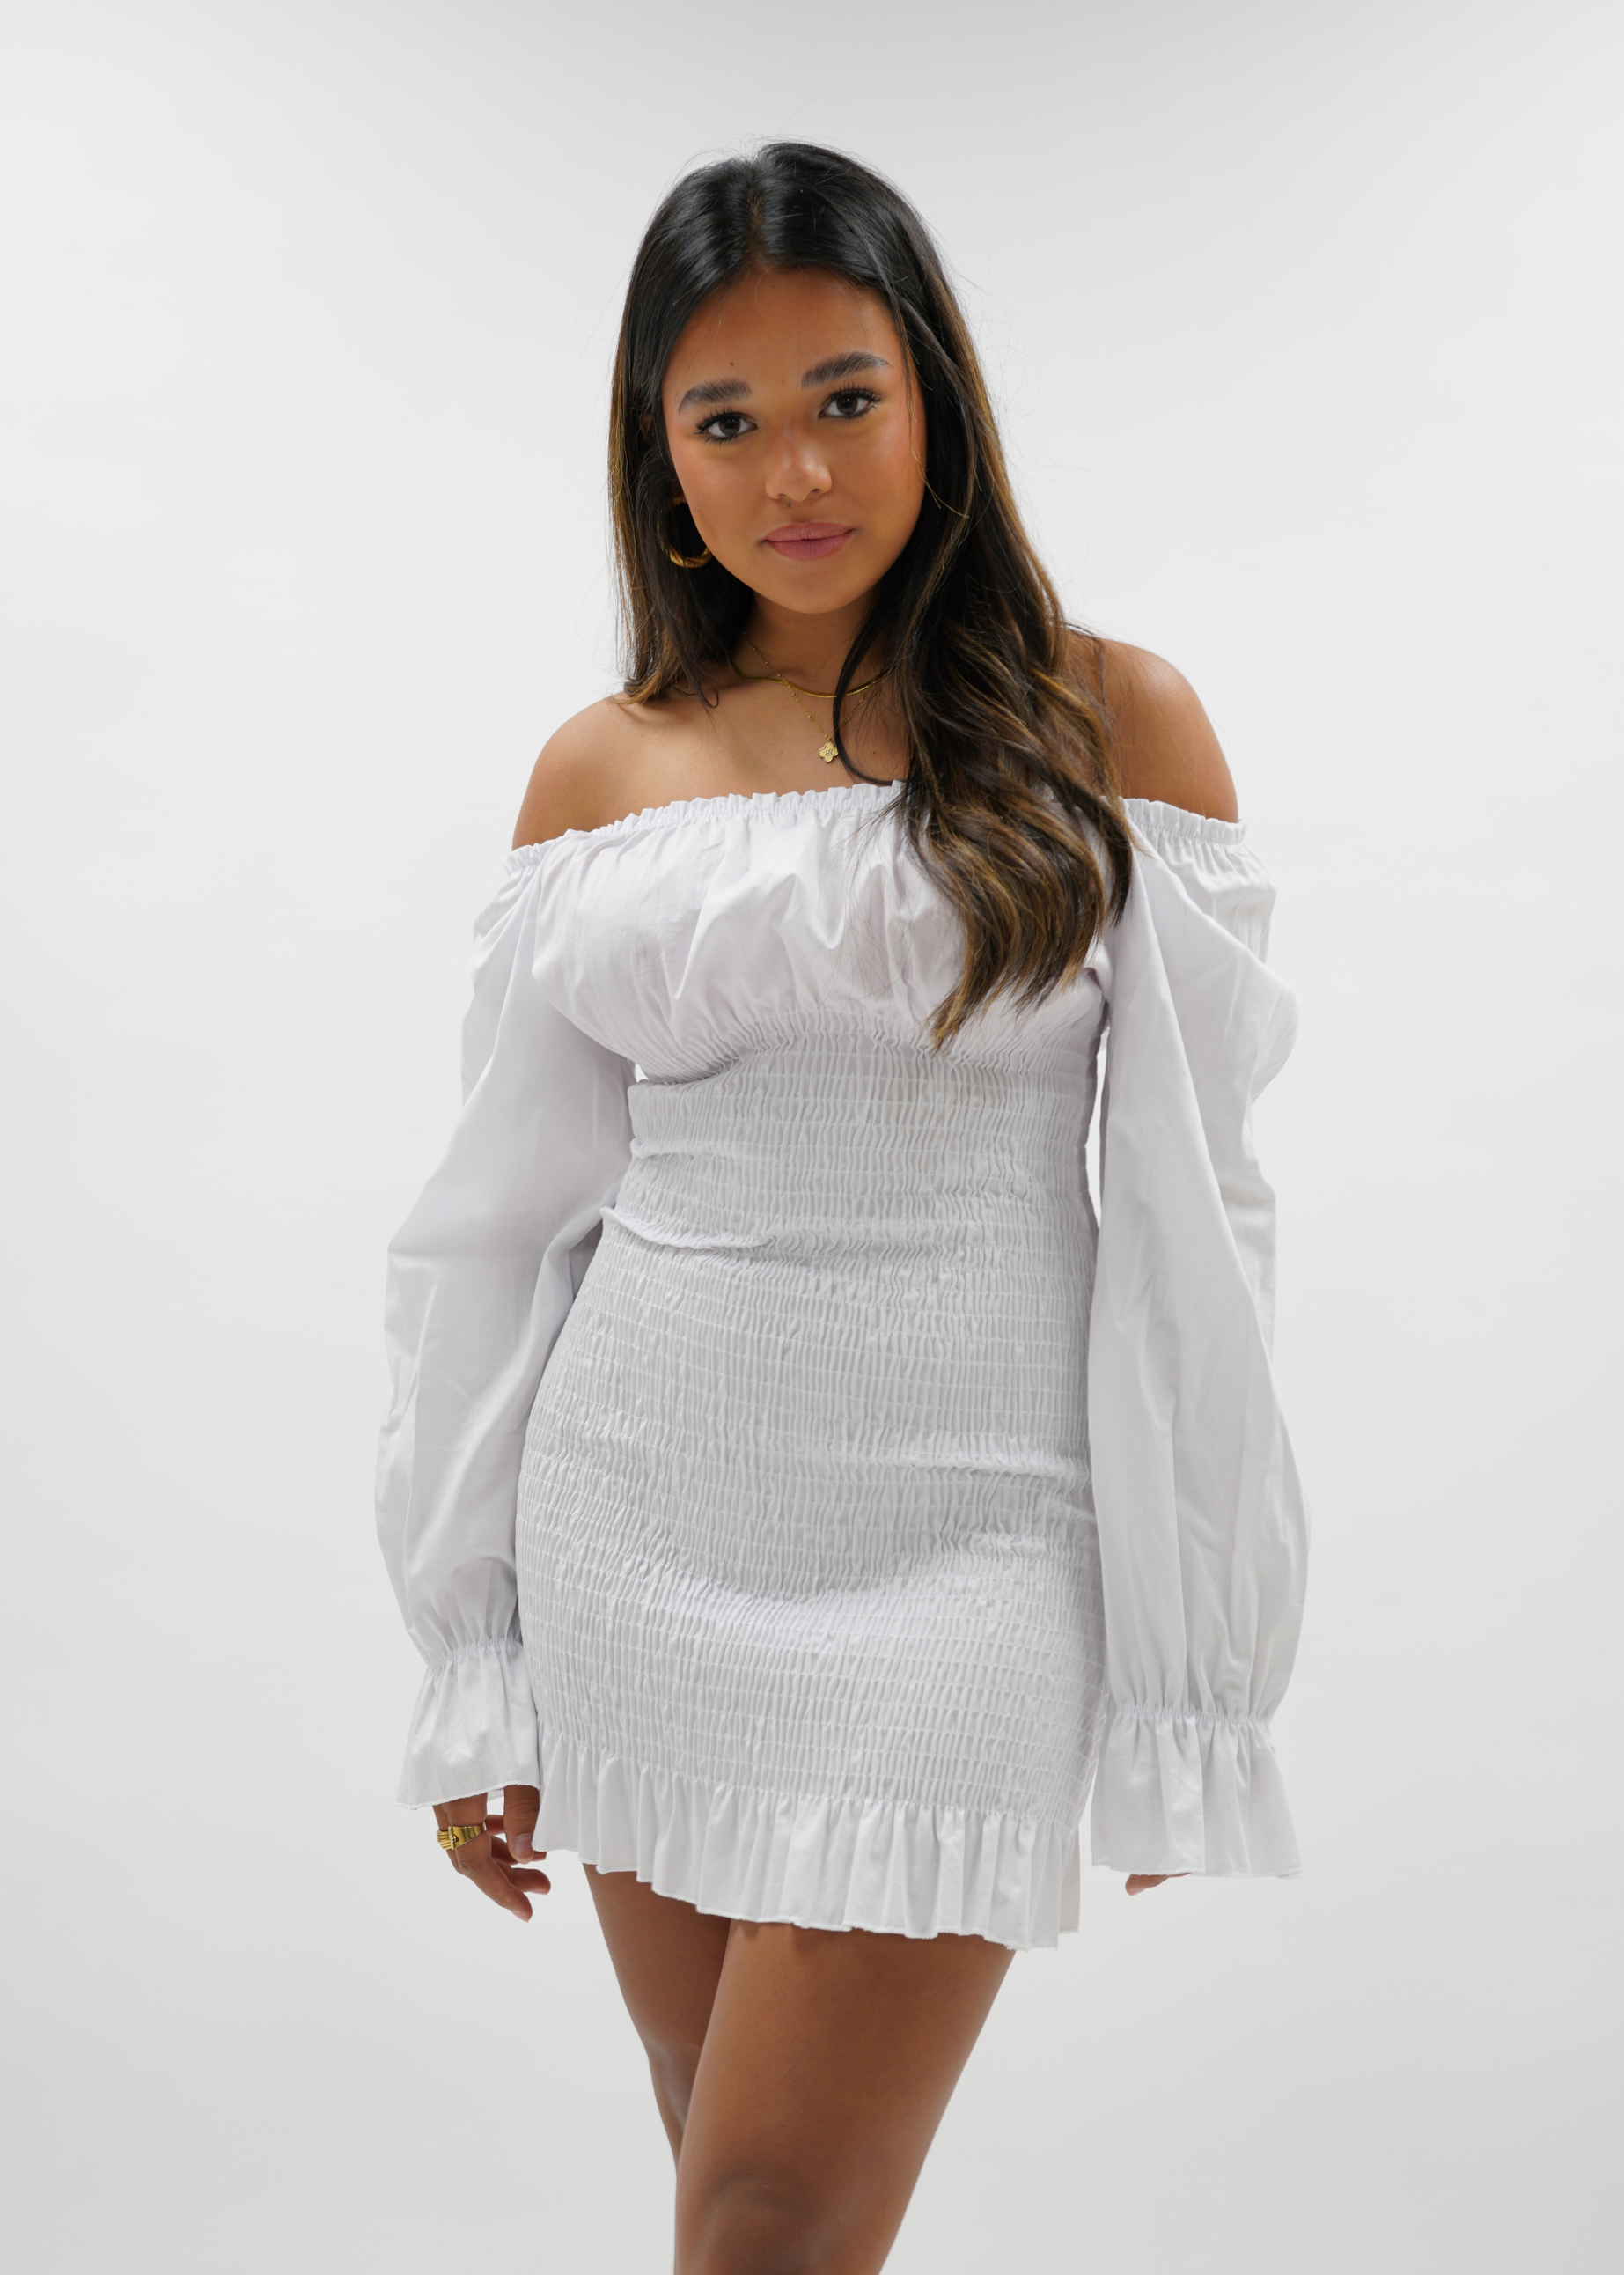 Mauré dress white